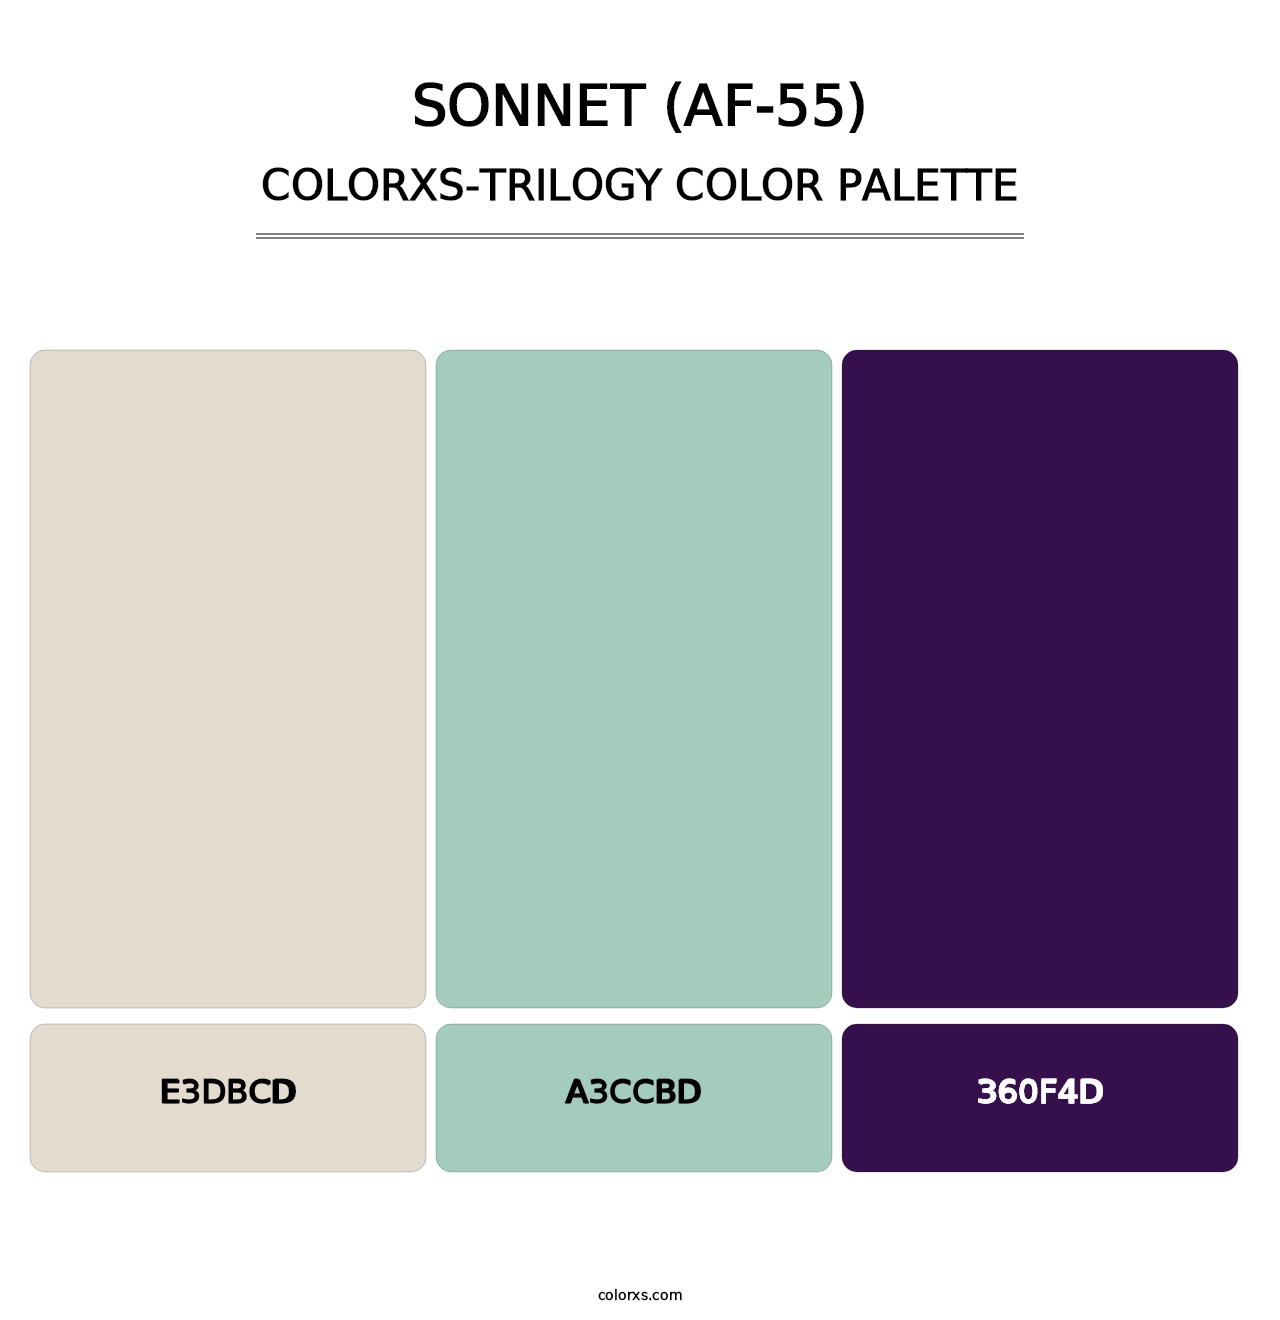 Sonnet (AF-55) - Colorxs Trilogy Palette